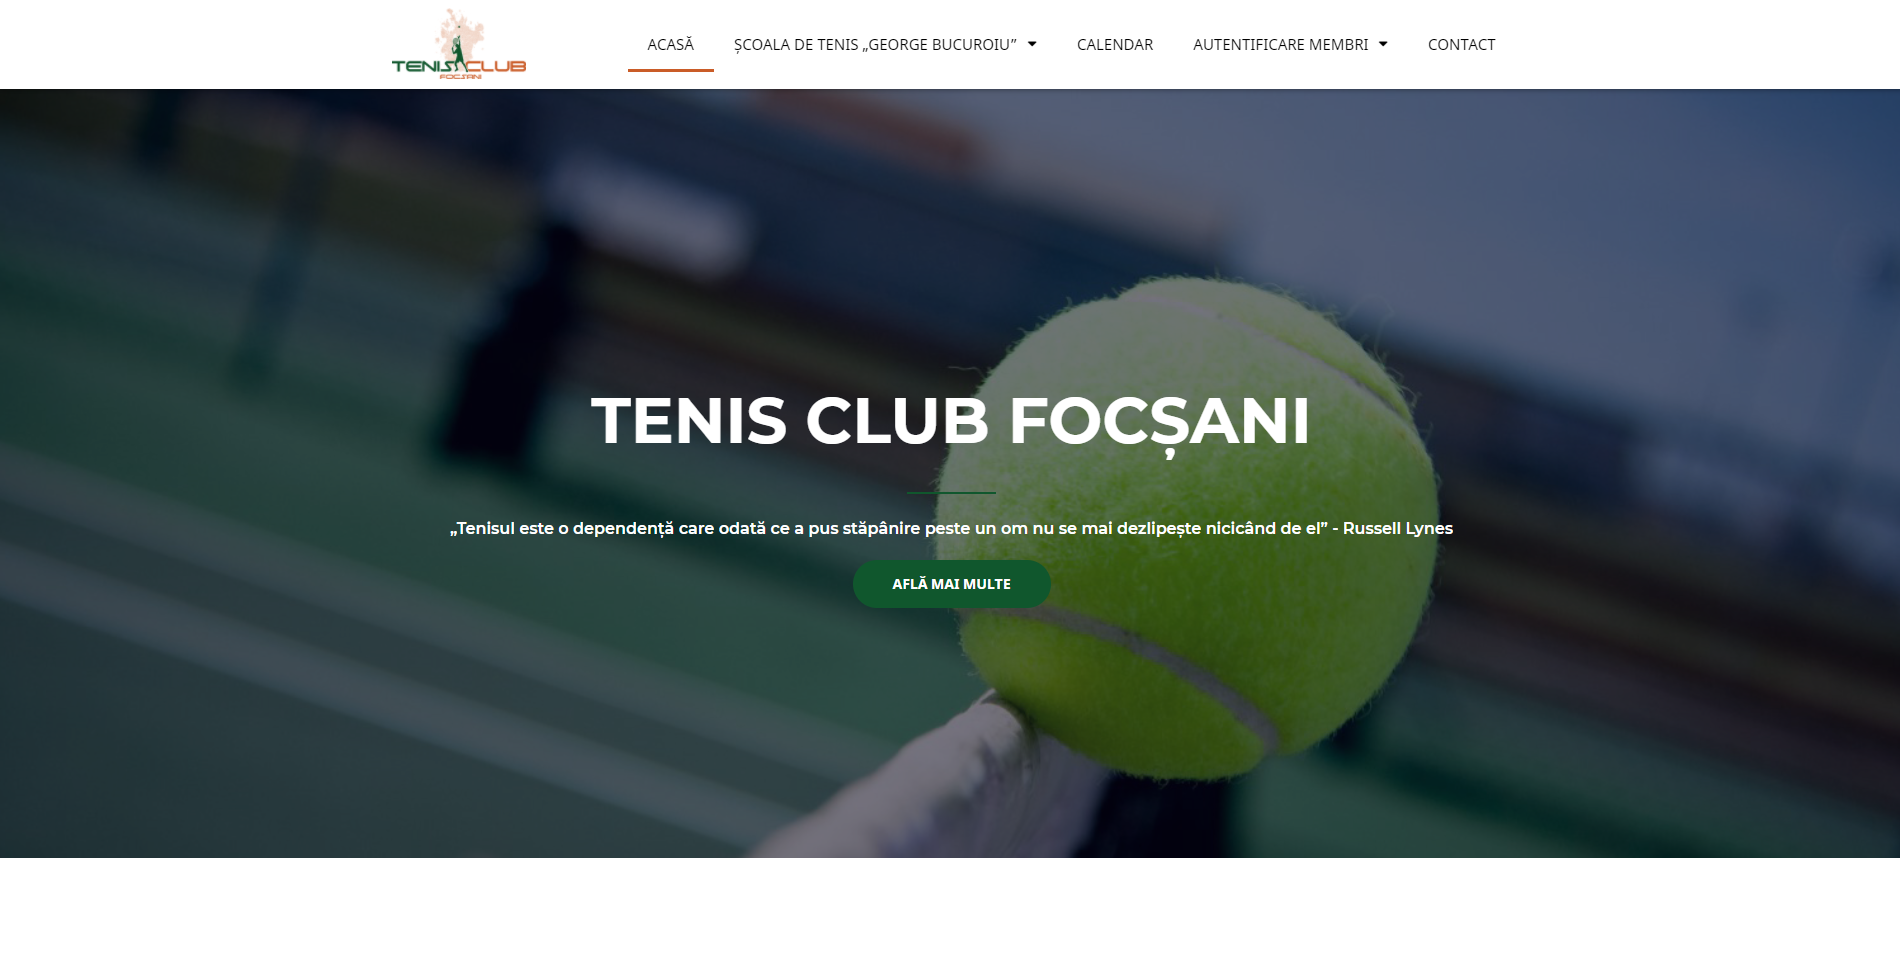 Tenis Club Focsani